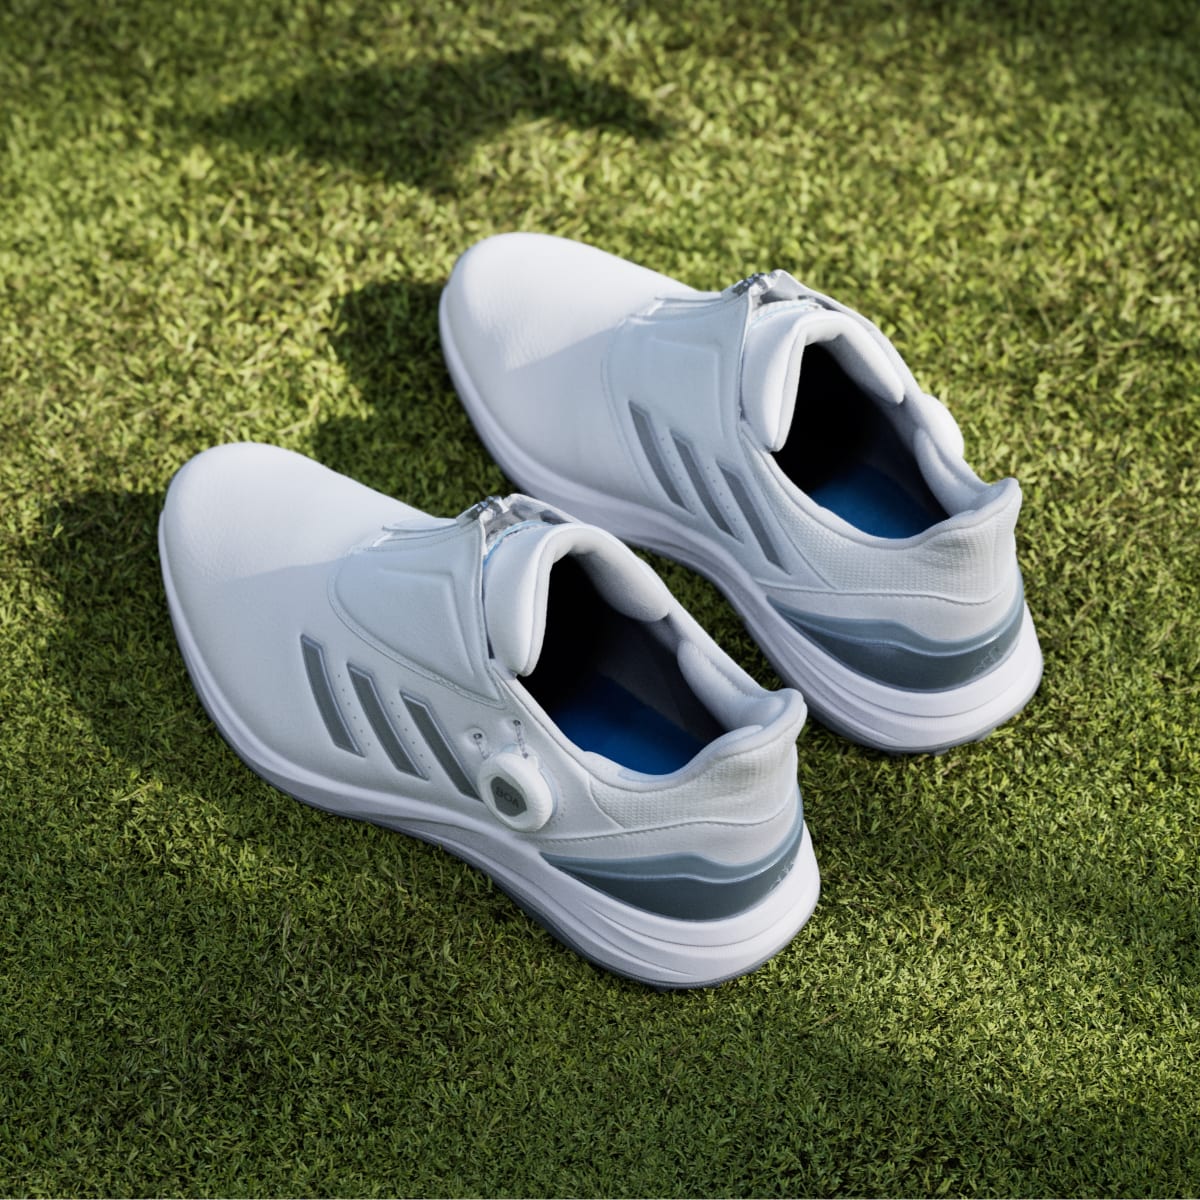 Adidas Solarmotion BOA 24 Spikeless Golf Shoes. 9